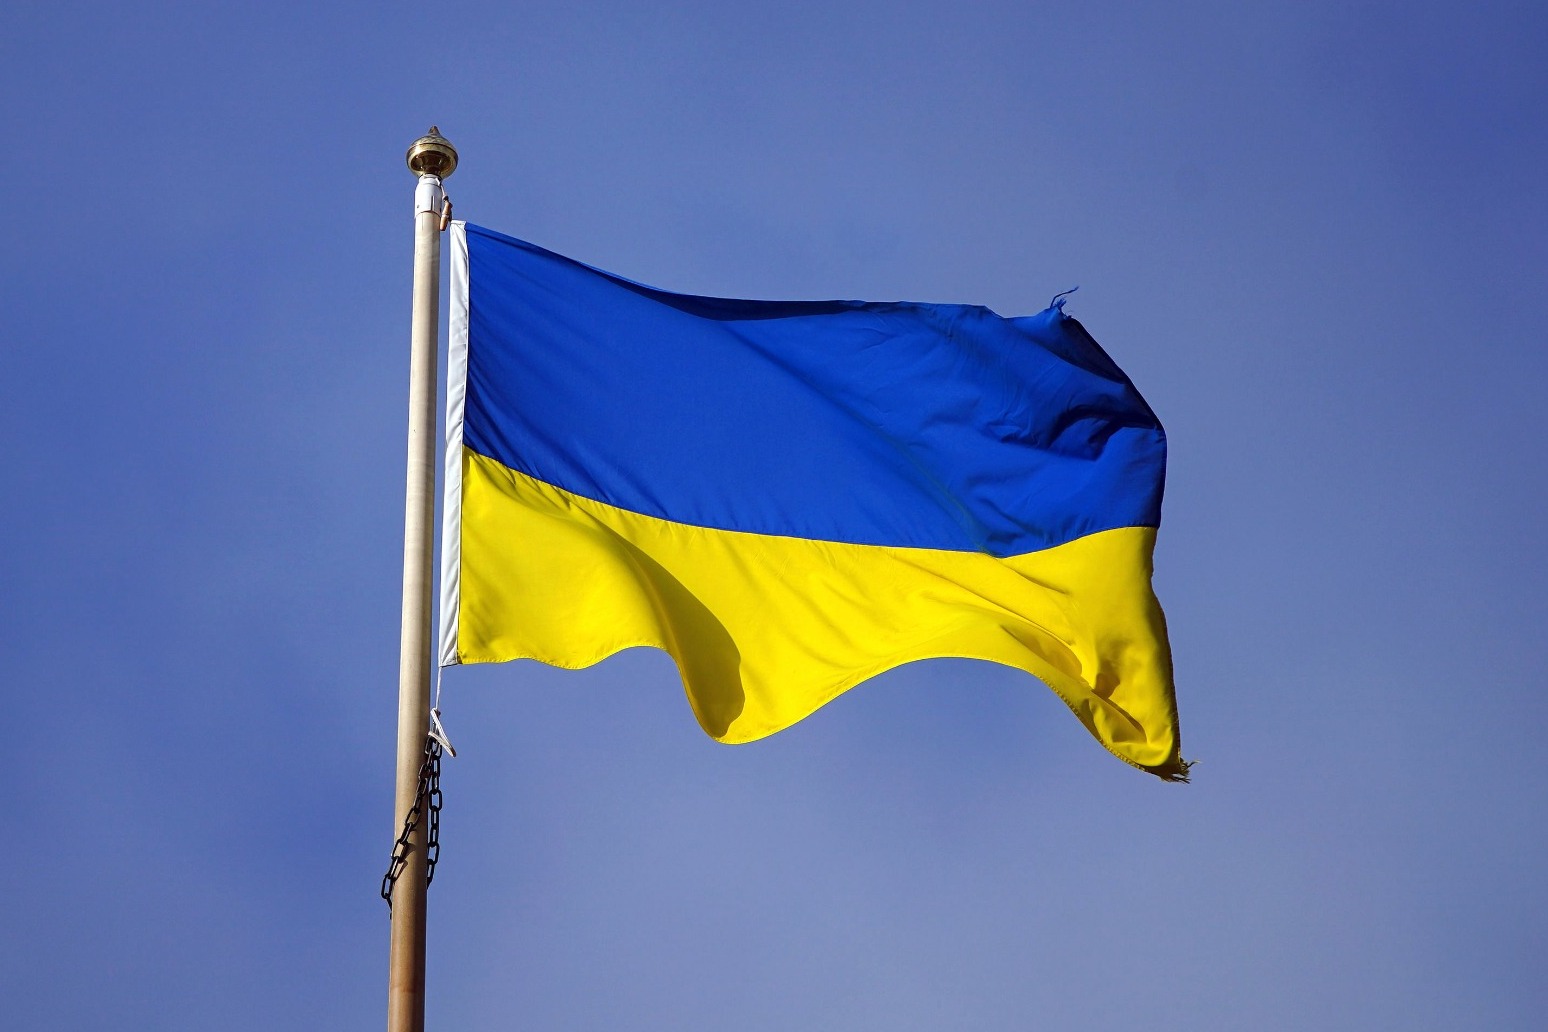 New visa extension for Ukrainians in UK 